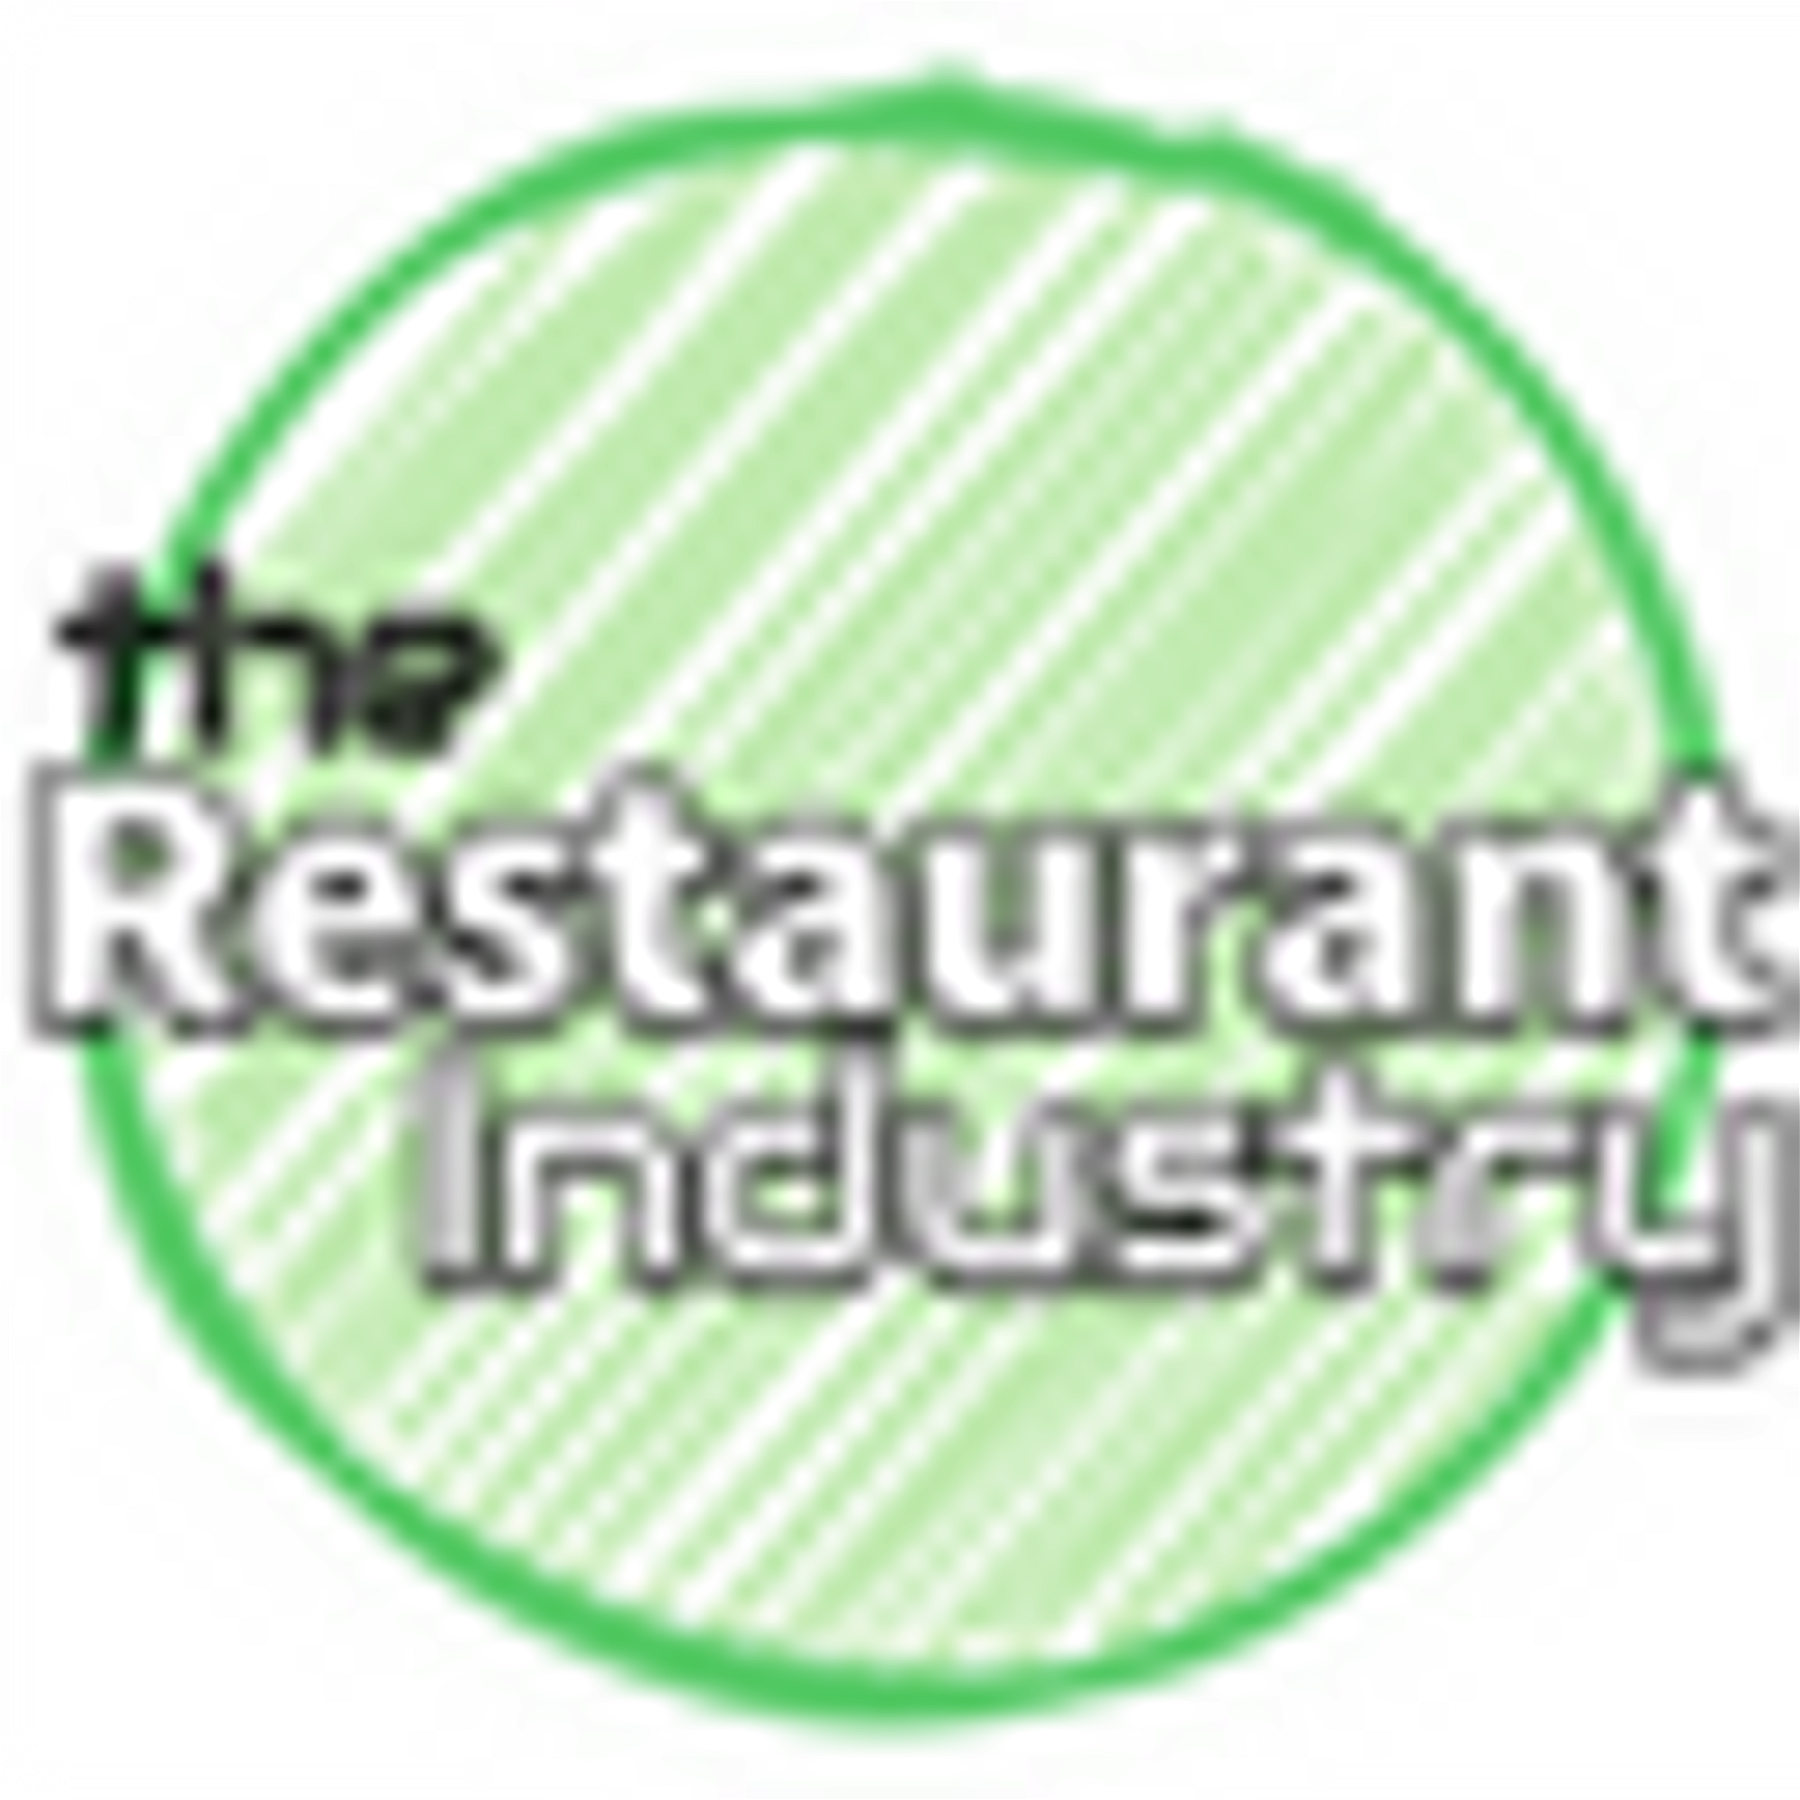 the Restaurant Industry 🍜